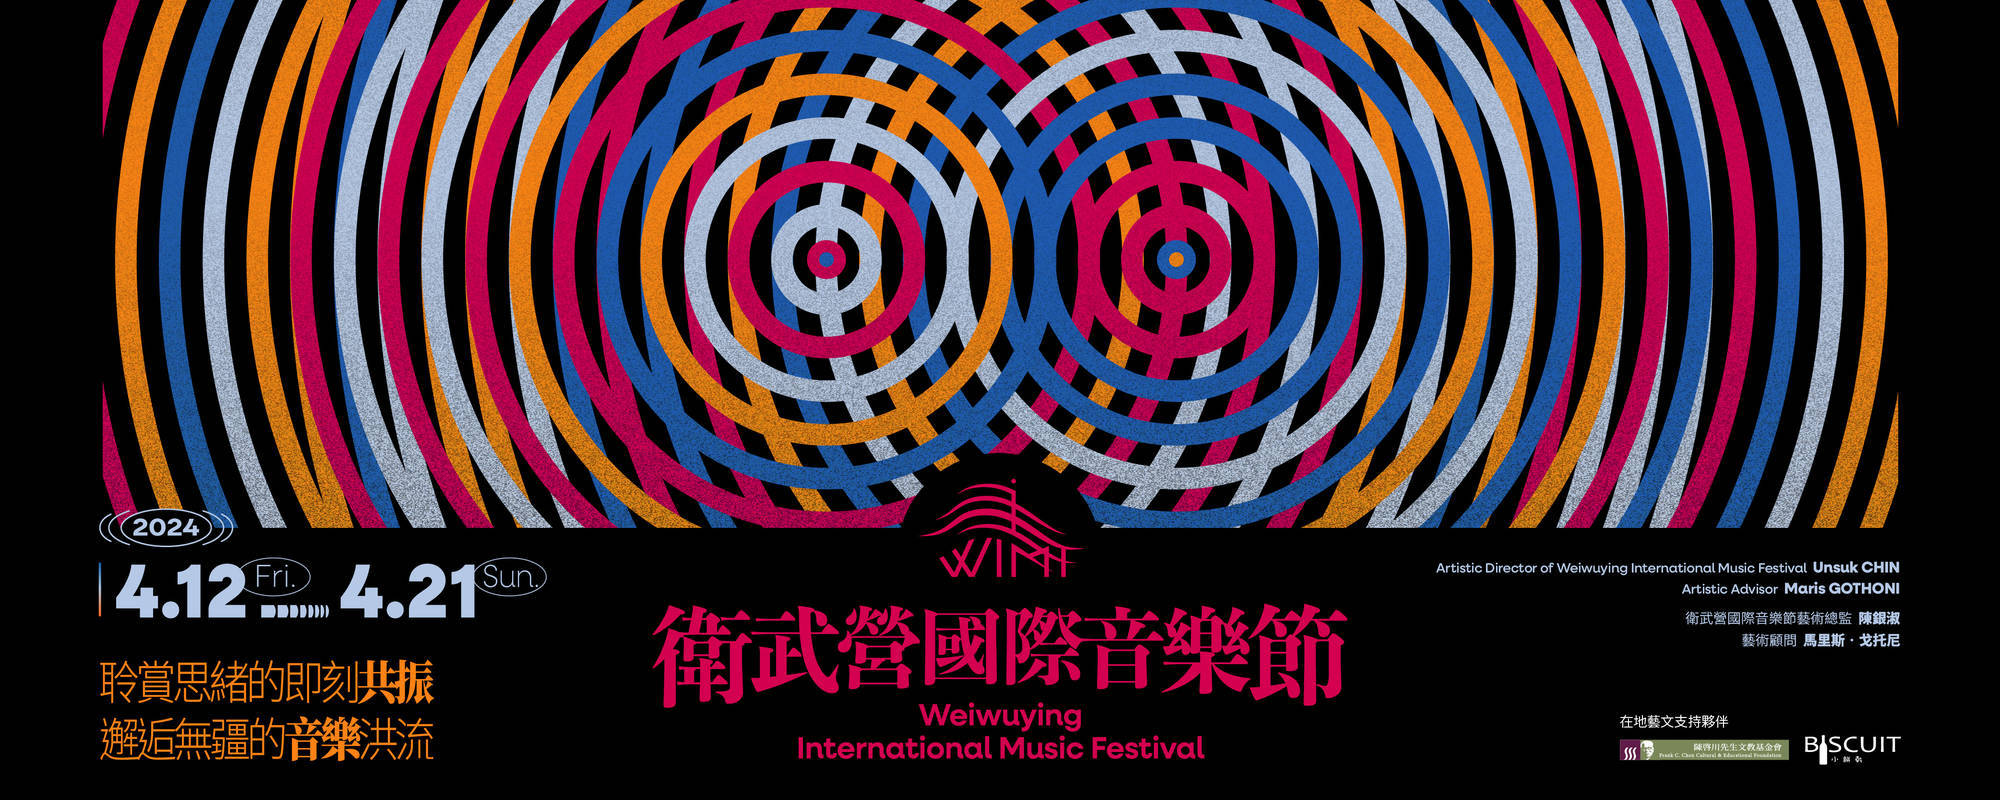 2024 Weiwuying International Music Festival